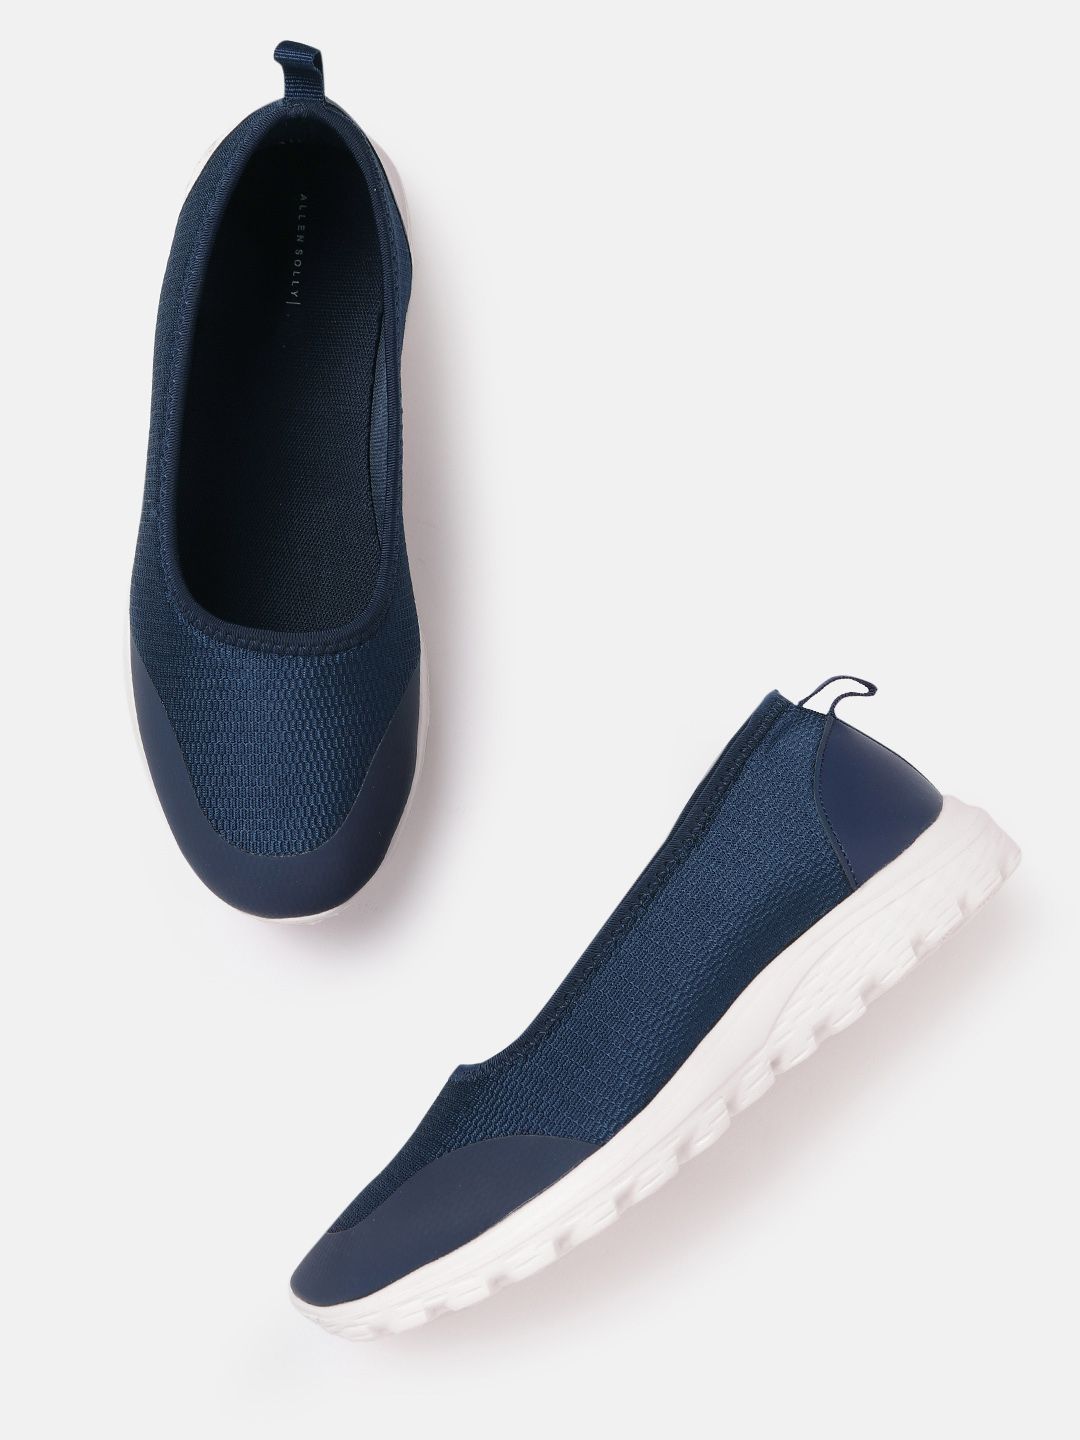 Allen Solly Women Navy Blue Woven Design Slip-On Sneakers Price in India